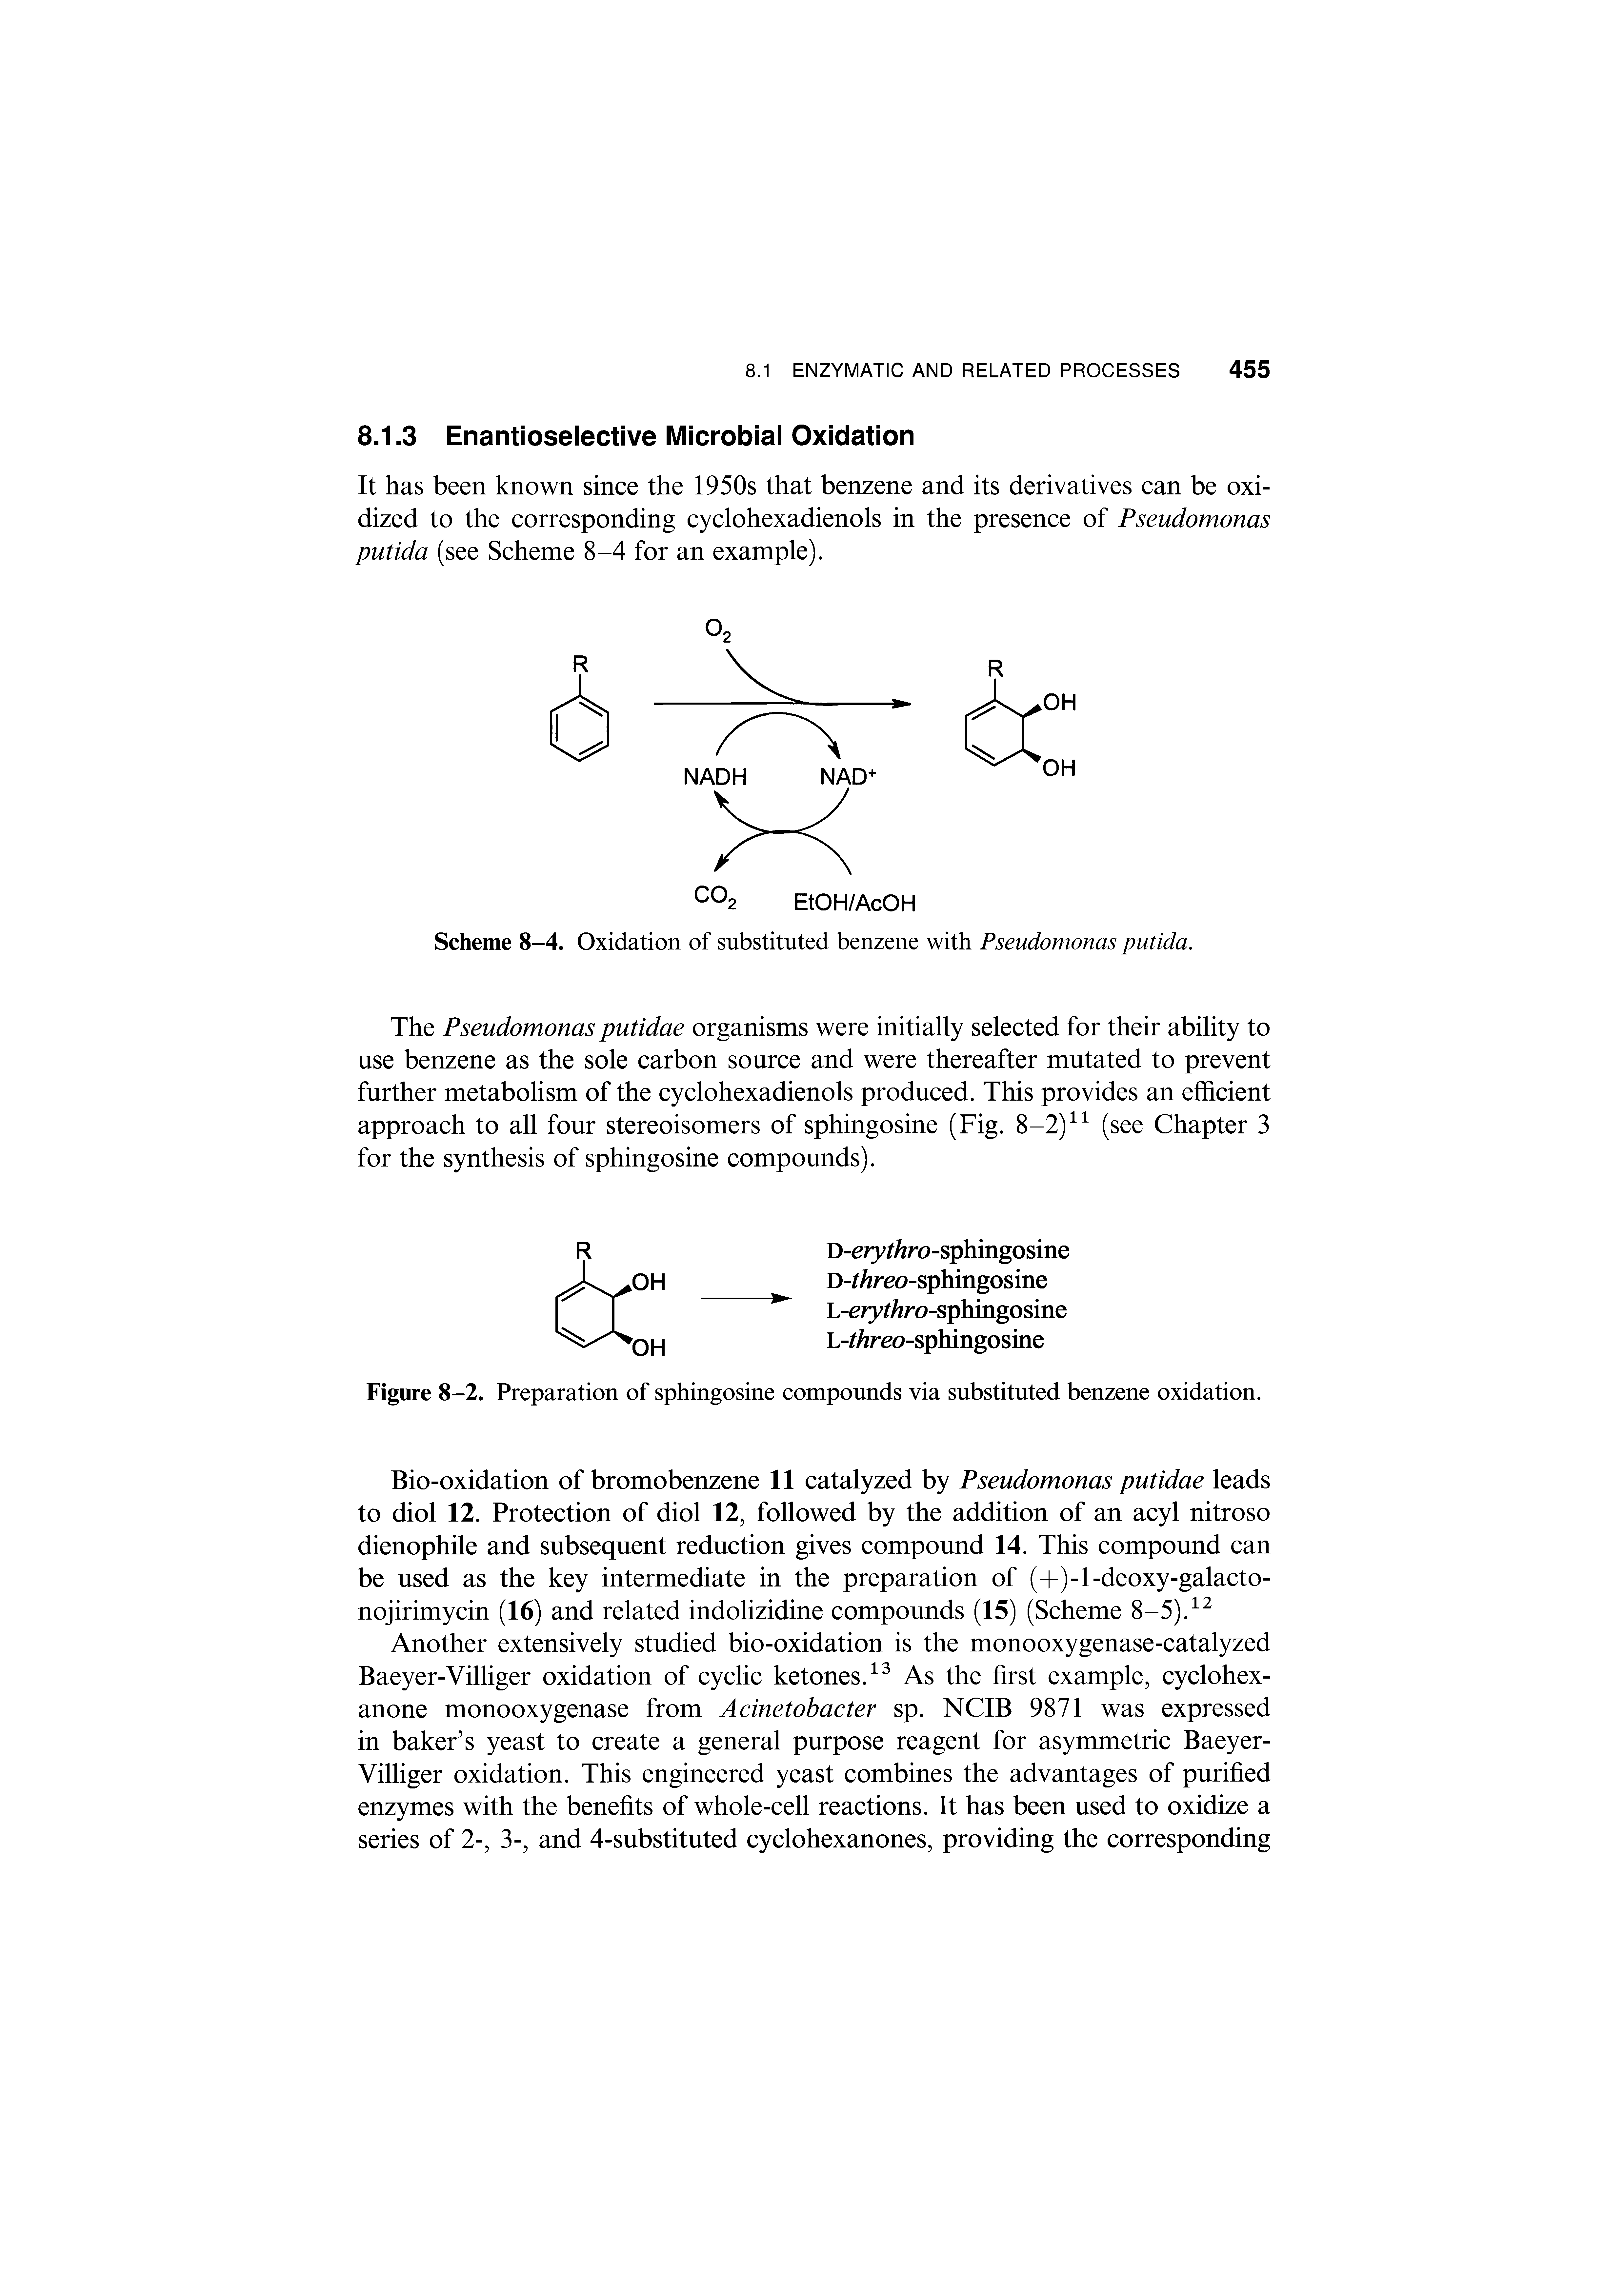 Scheme 8-4. Oxidation of substituted benzene with Pseudomonas putida.